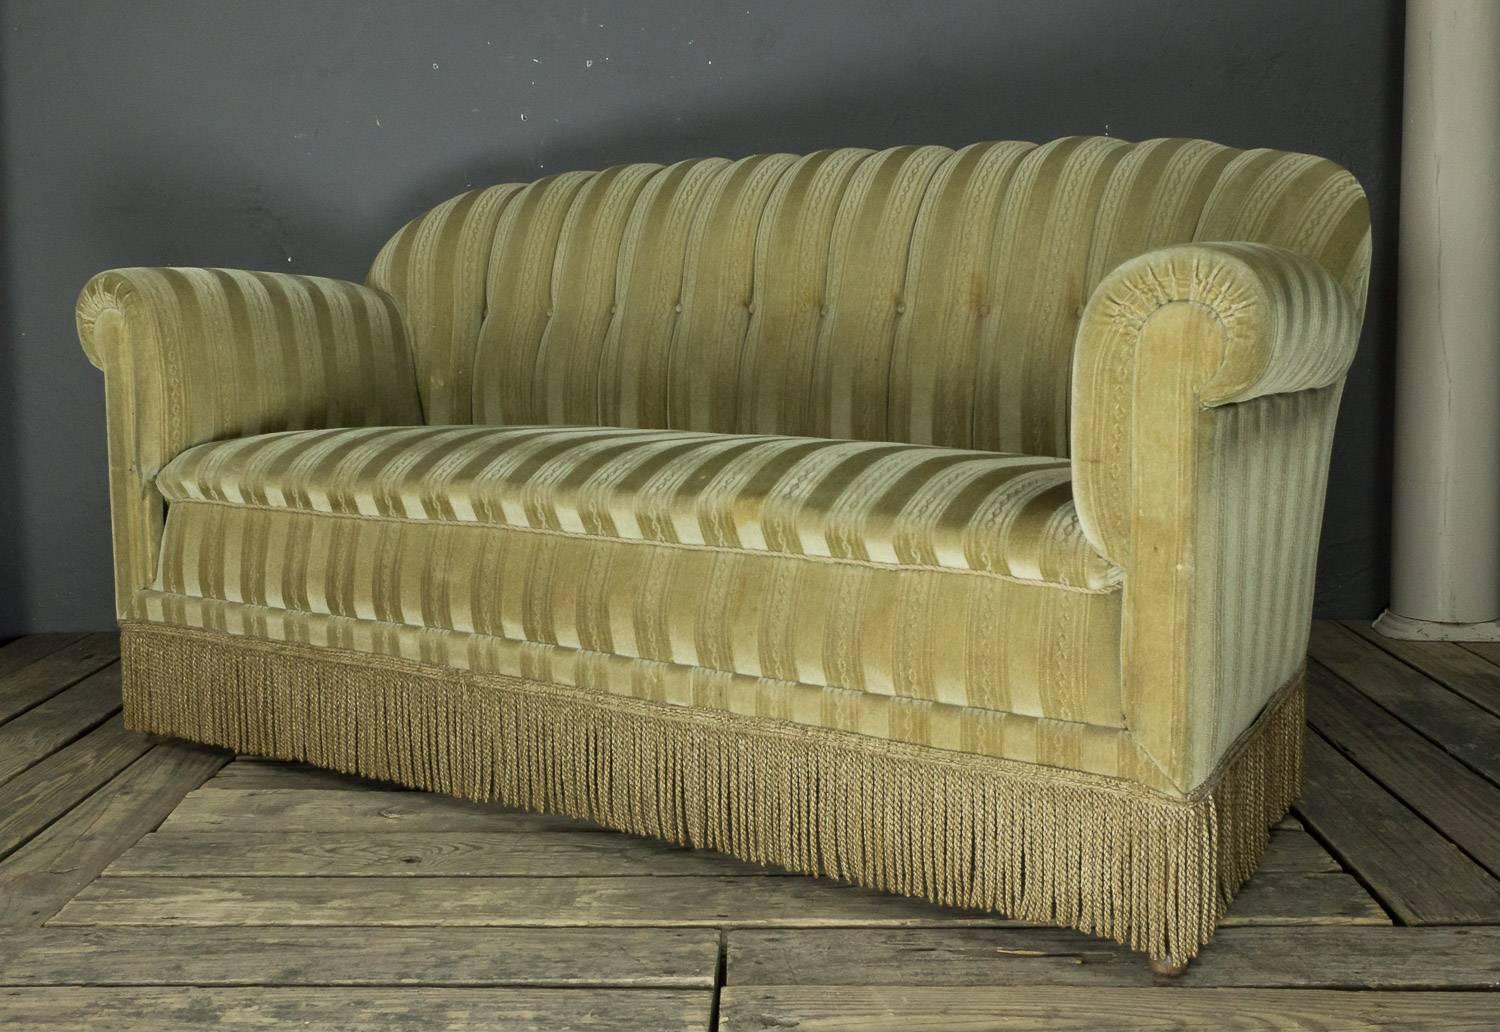 American 1930s sofa in striped mohair velvet.

Needs to be upholstered.

